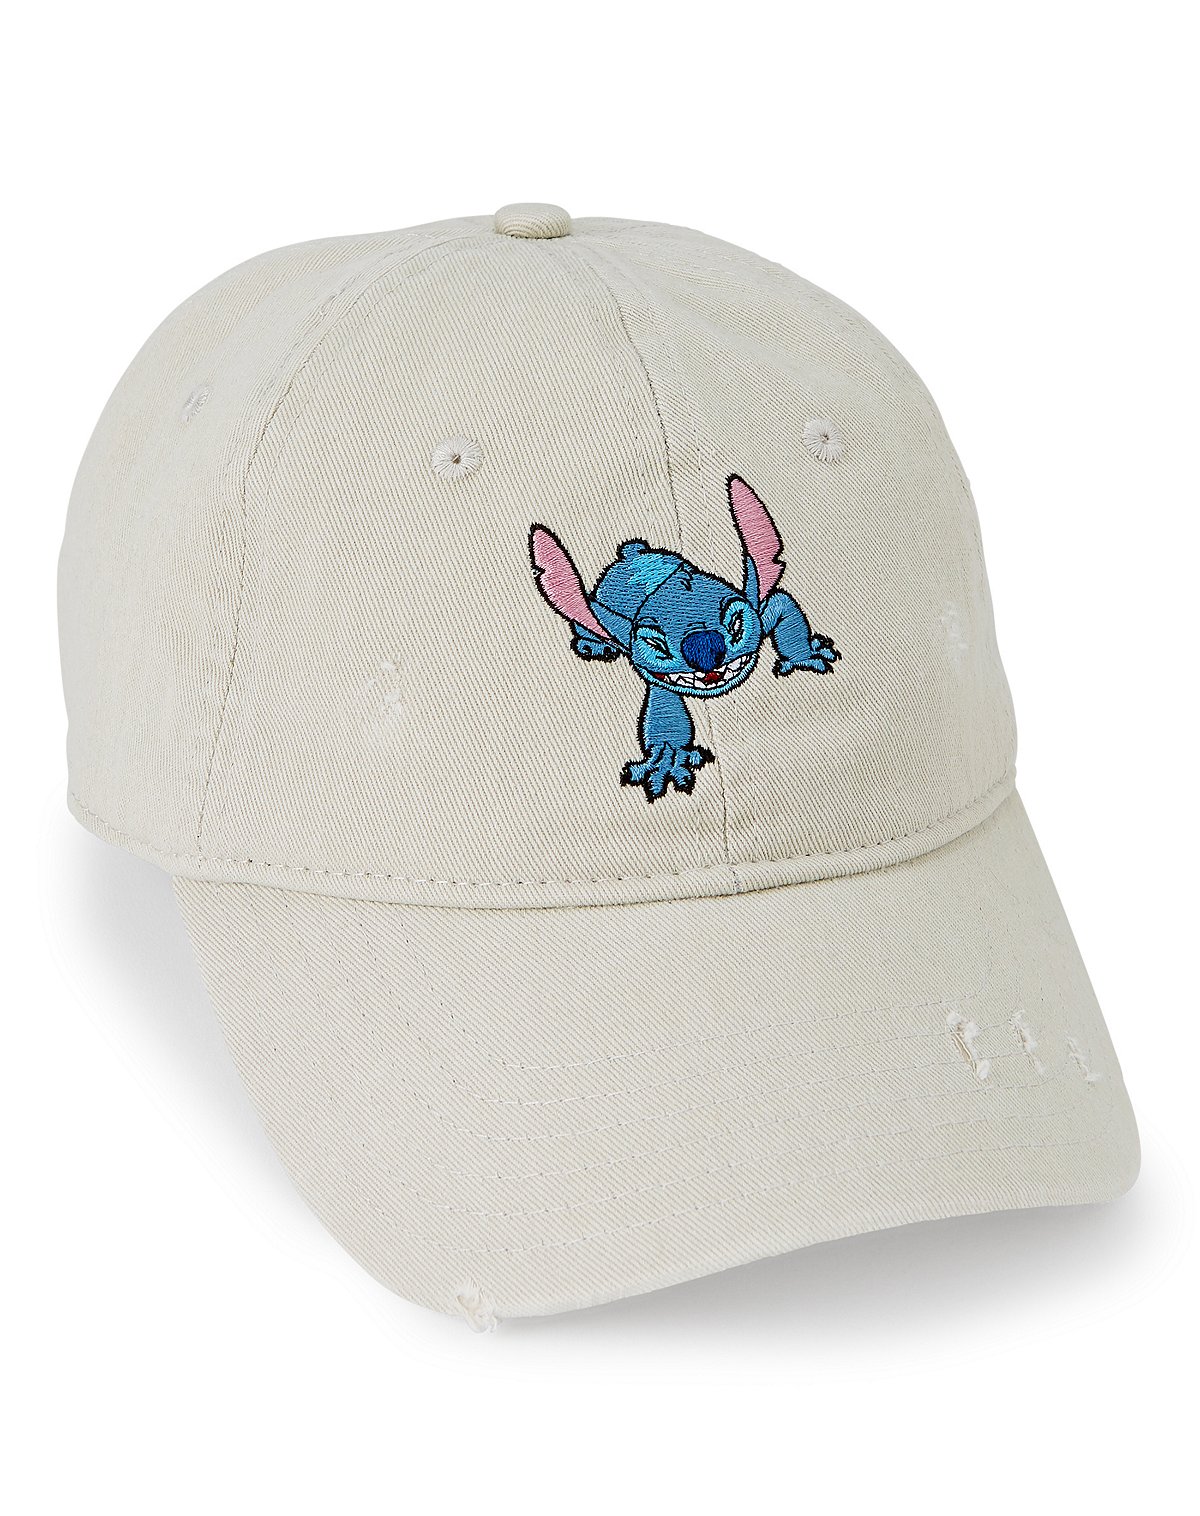 Stitch Hat